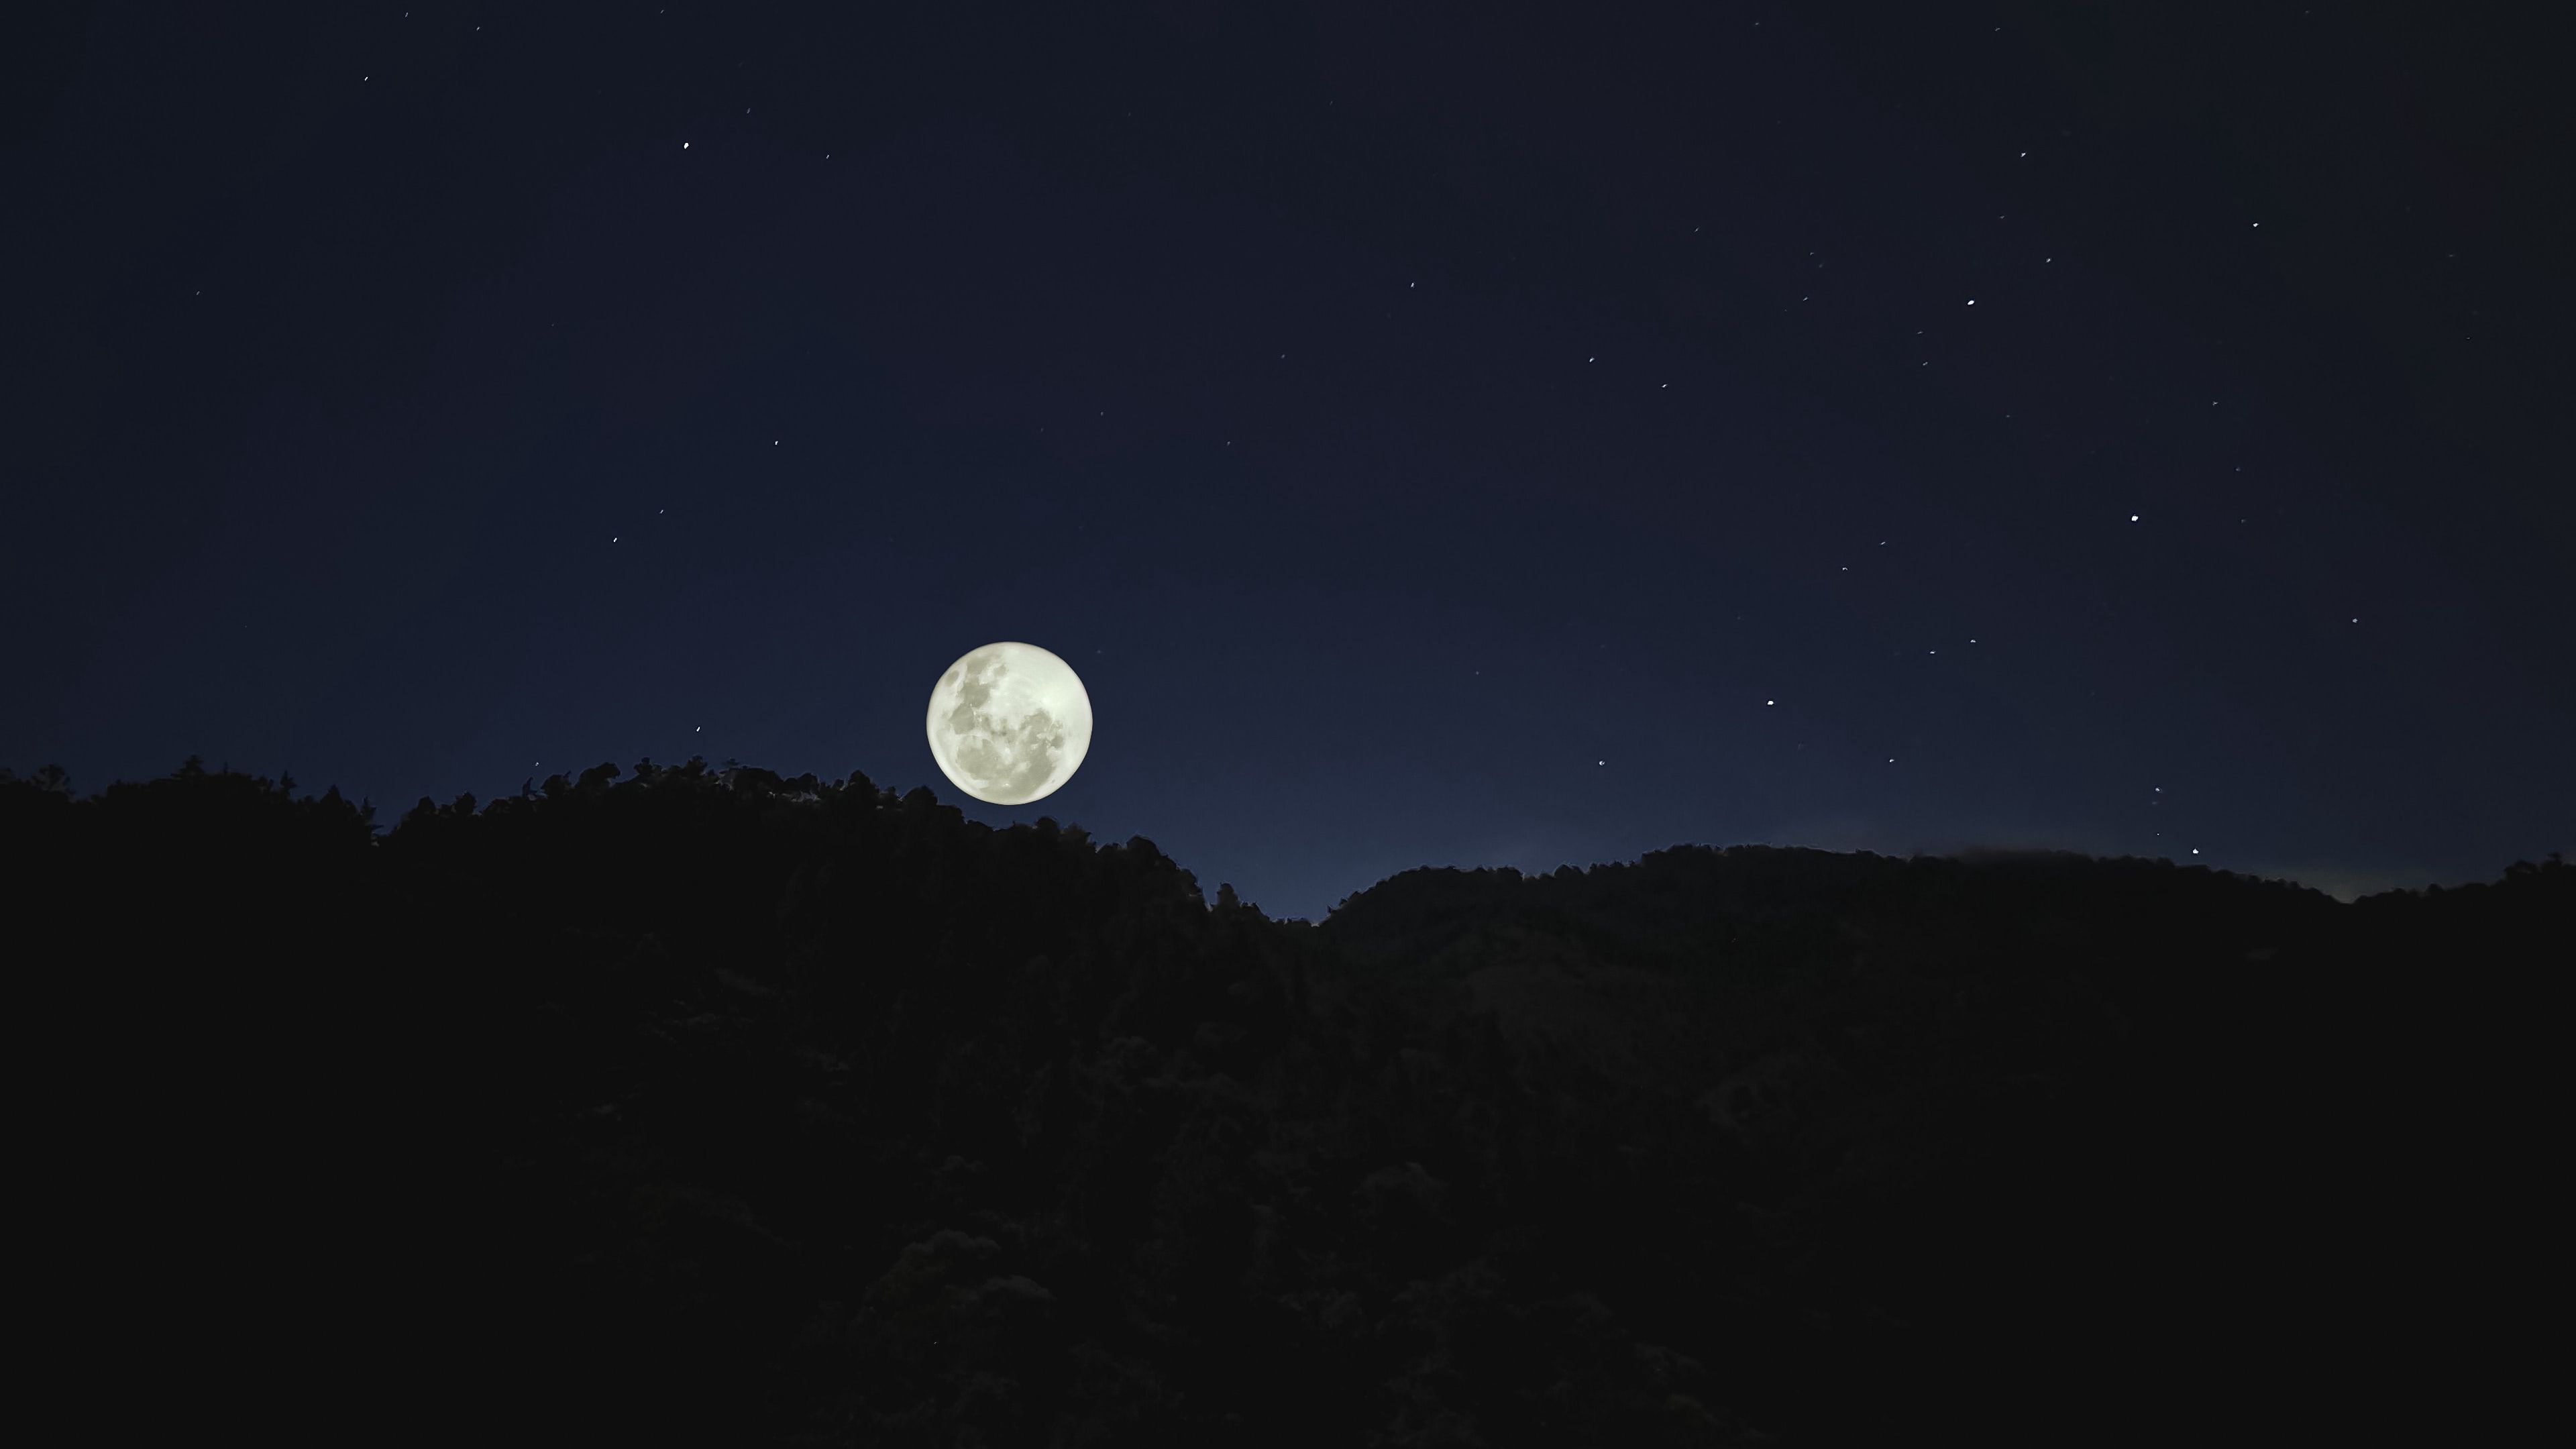 Download wallpaper 3840x2160 moon, hills, dark, night 4k uhd 16:9 HD background